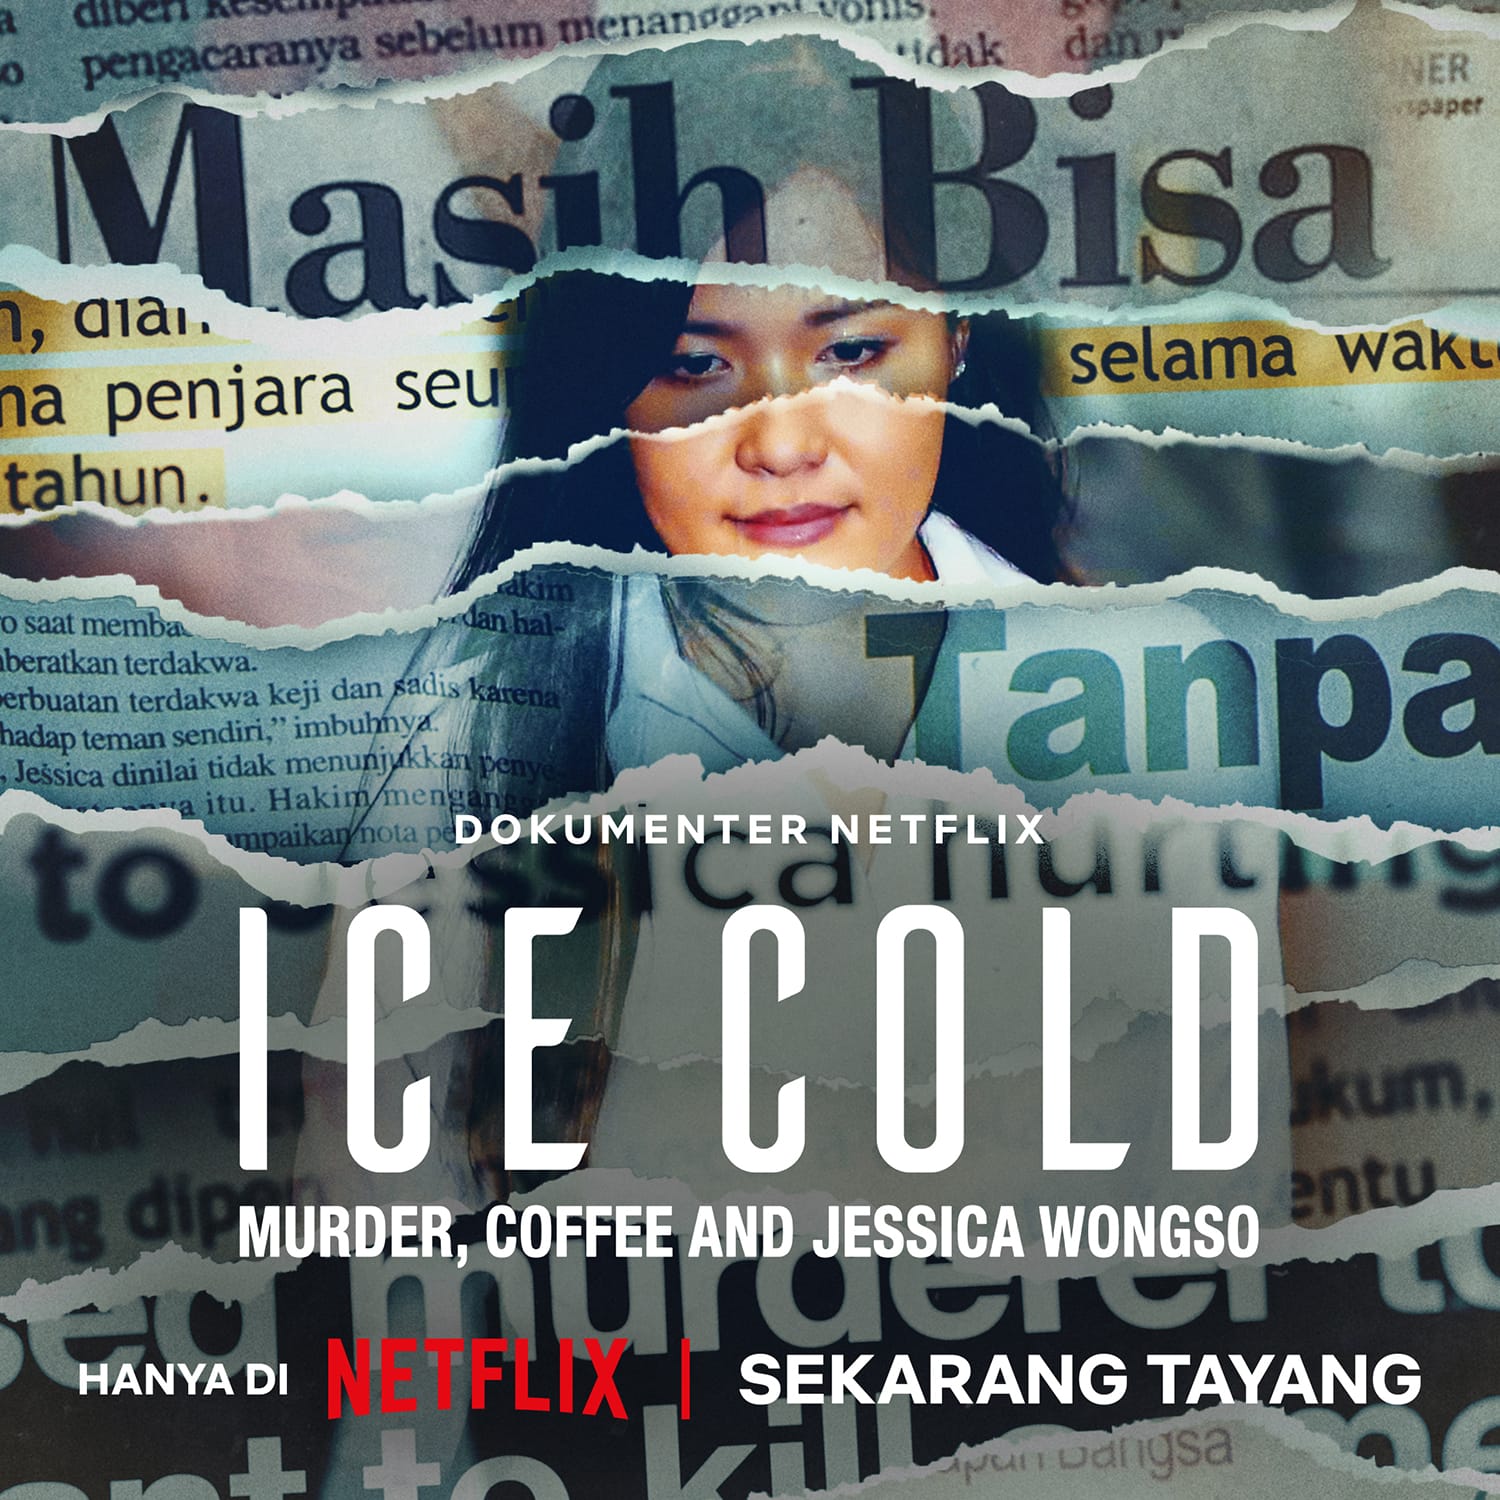 Kisah Kontroversial Kasus Jessica Wongso dan Kematian Mirna Salihin Dalam Lensa Film Dokumenter Netflix